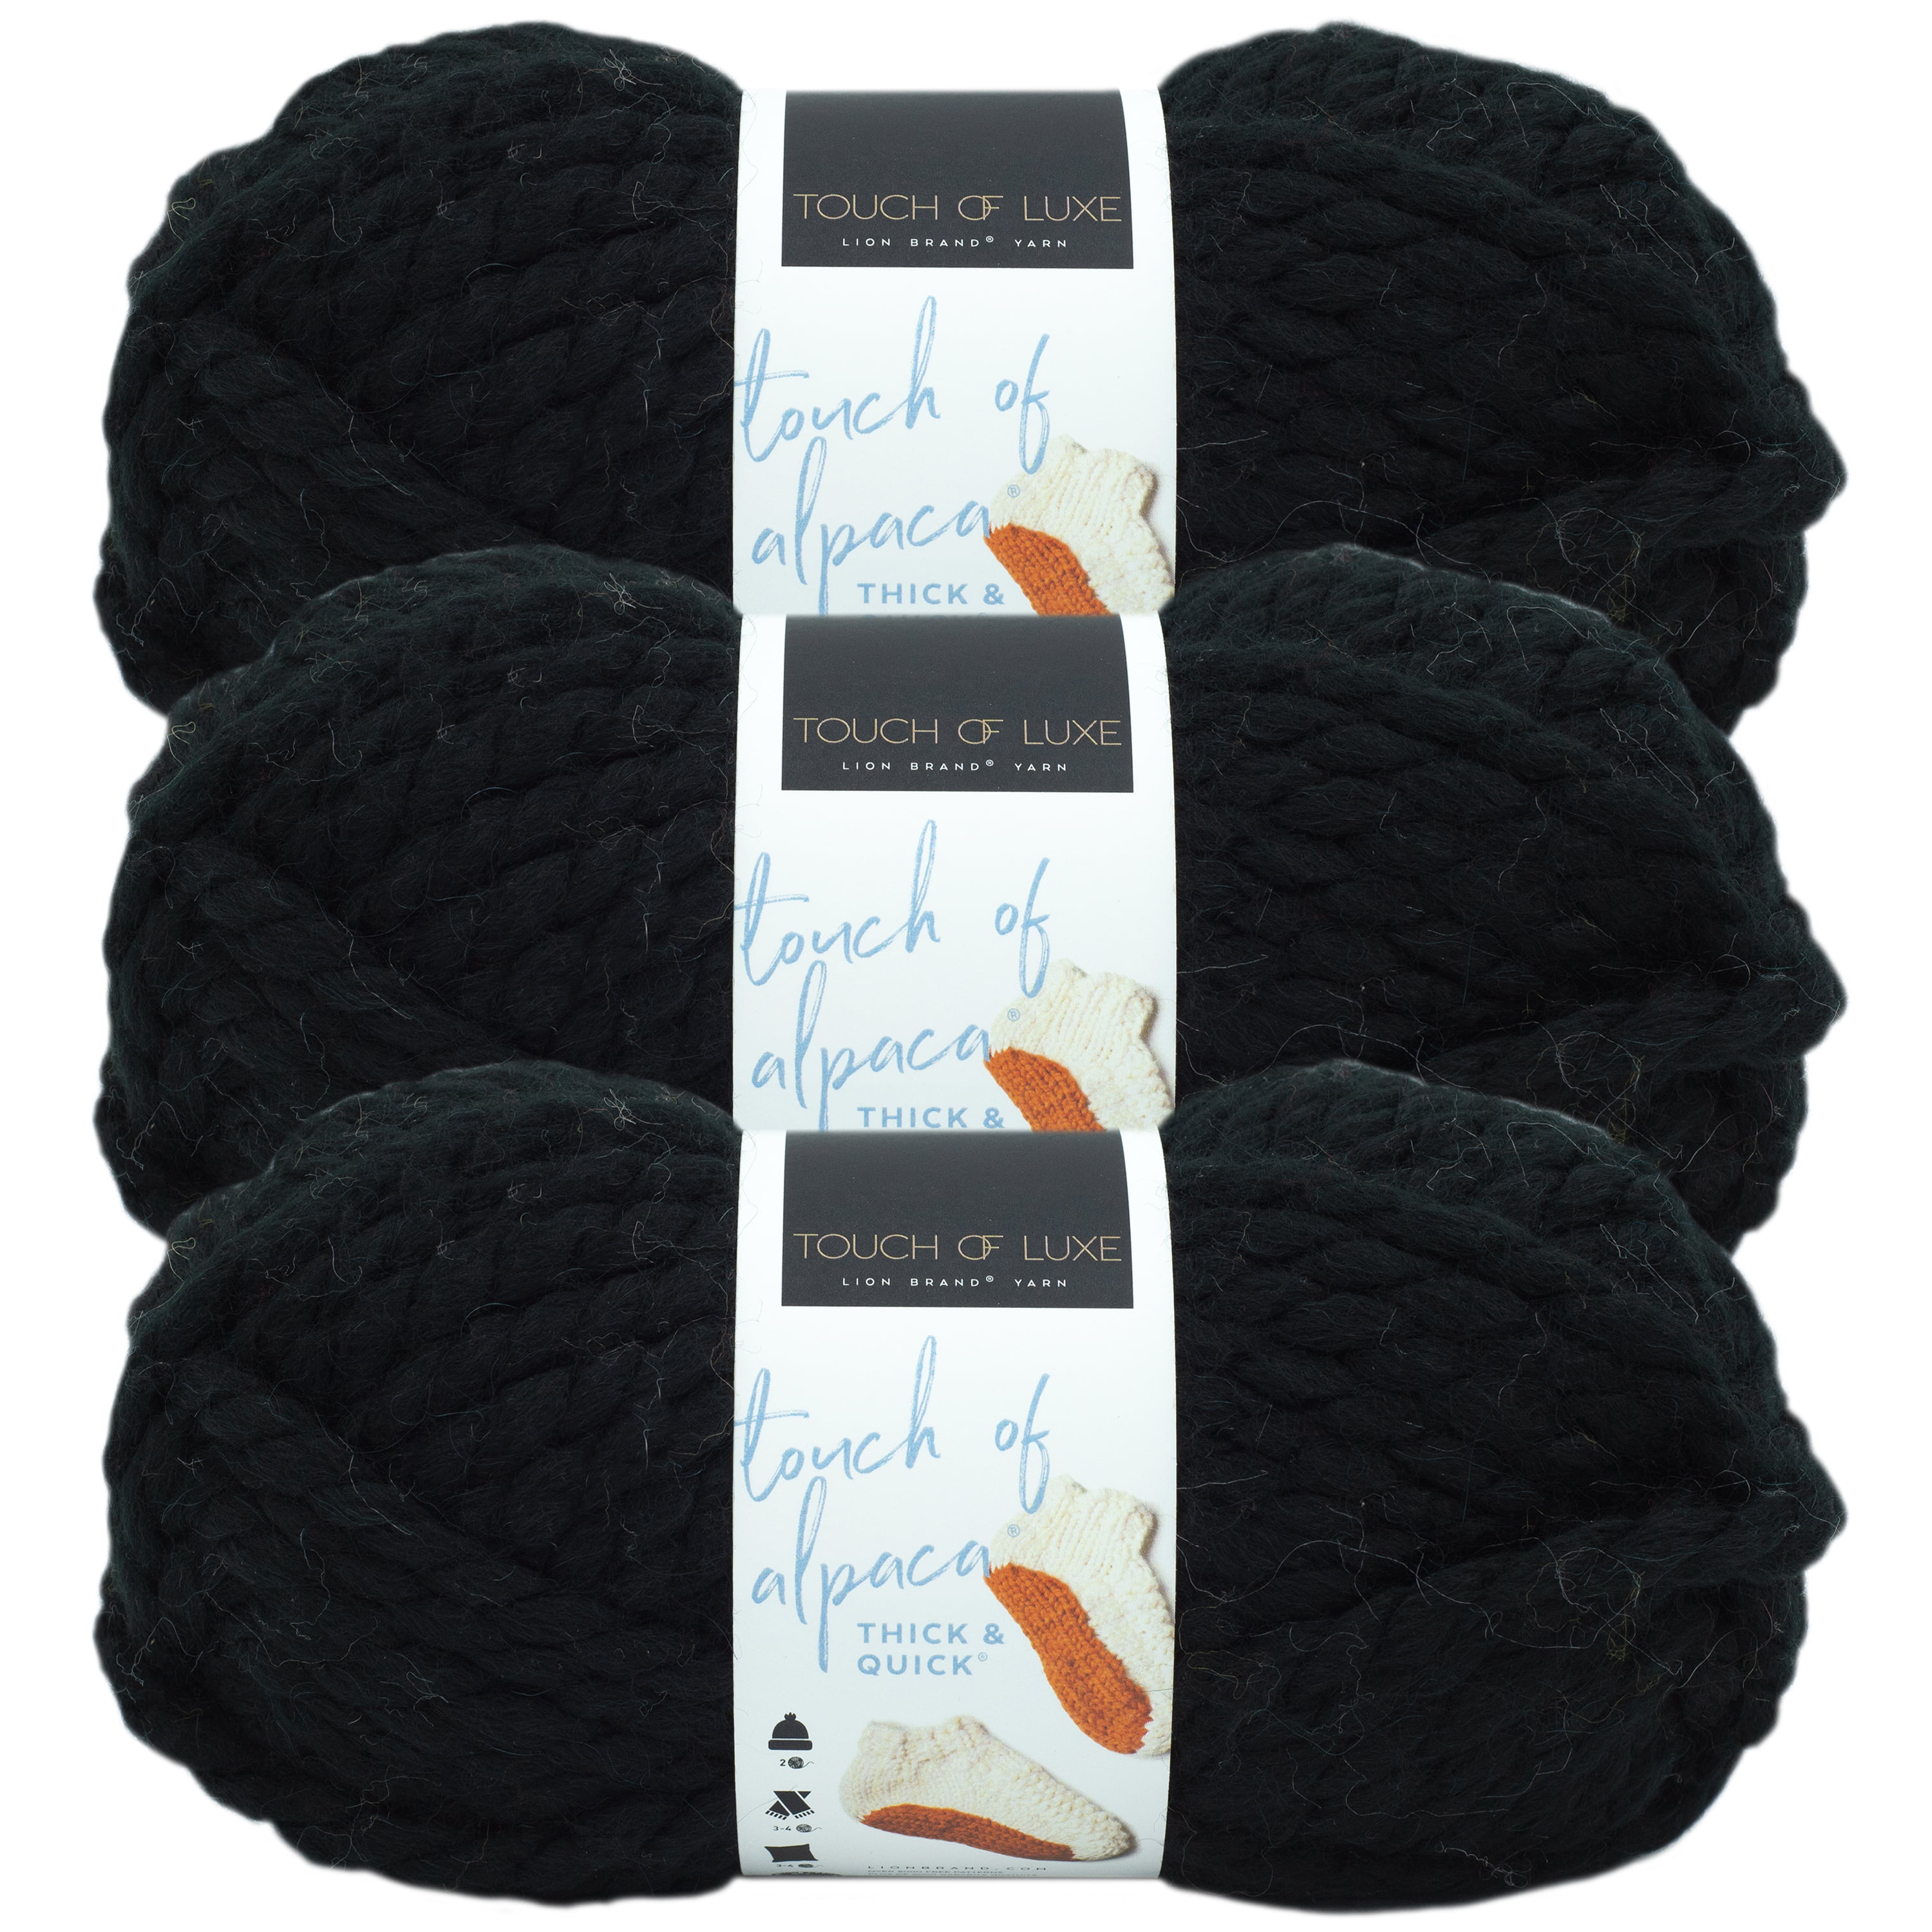 Lion Brand Touch of Alpaca Thick & Quick Yarn-Ebony 686-153